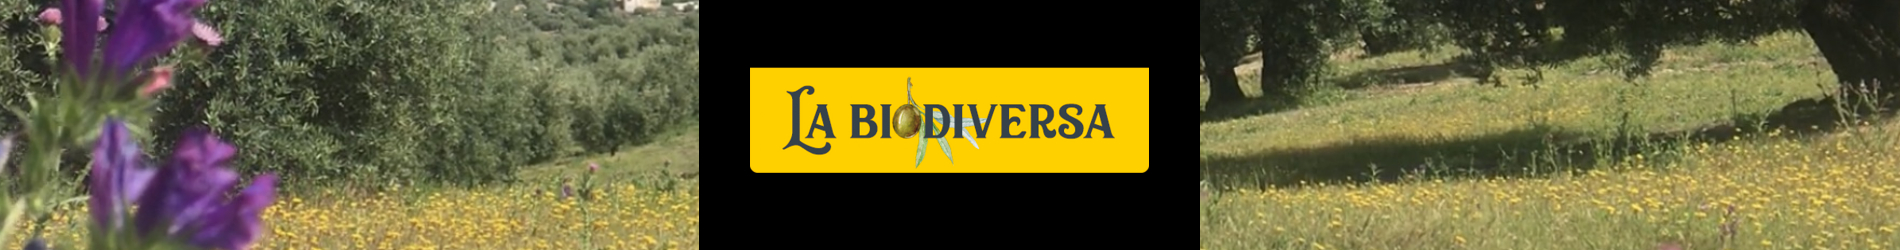 banner_la_biodiversa